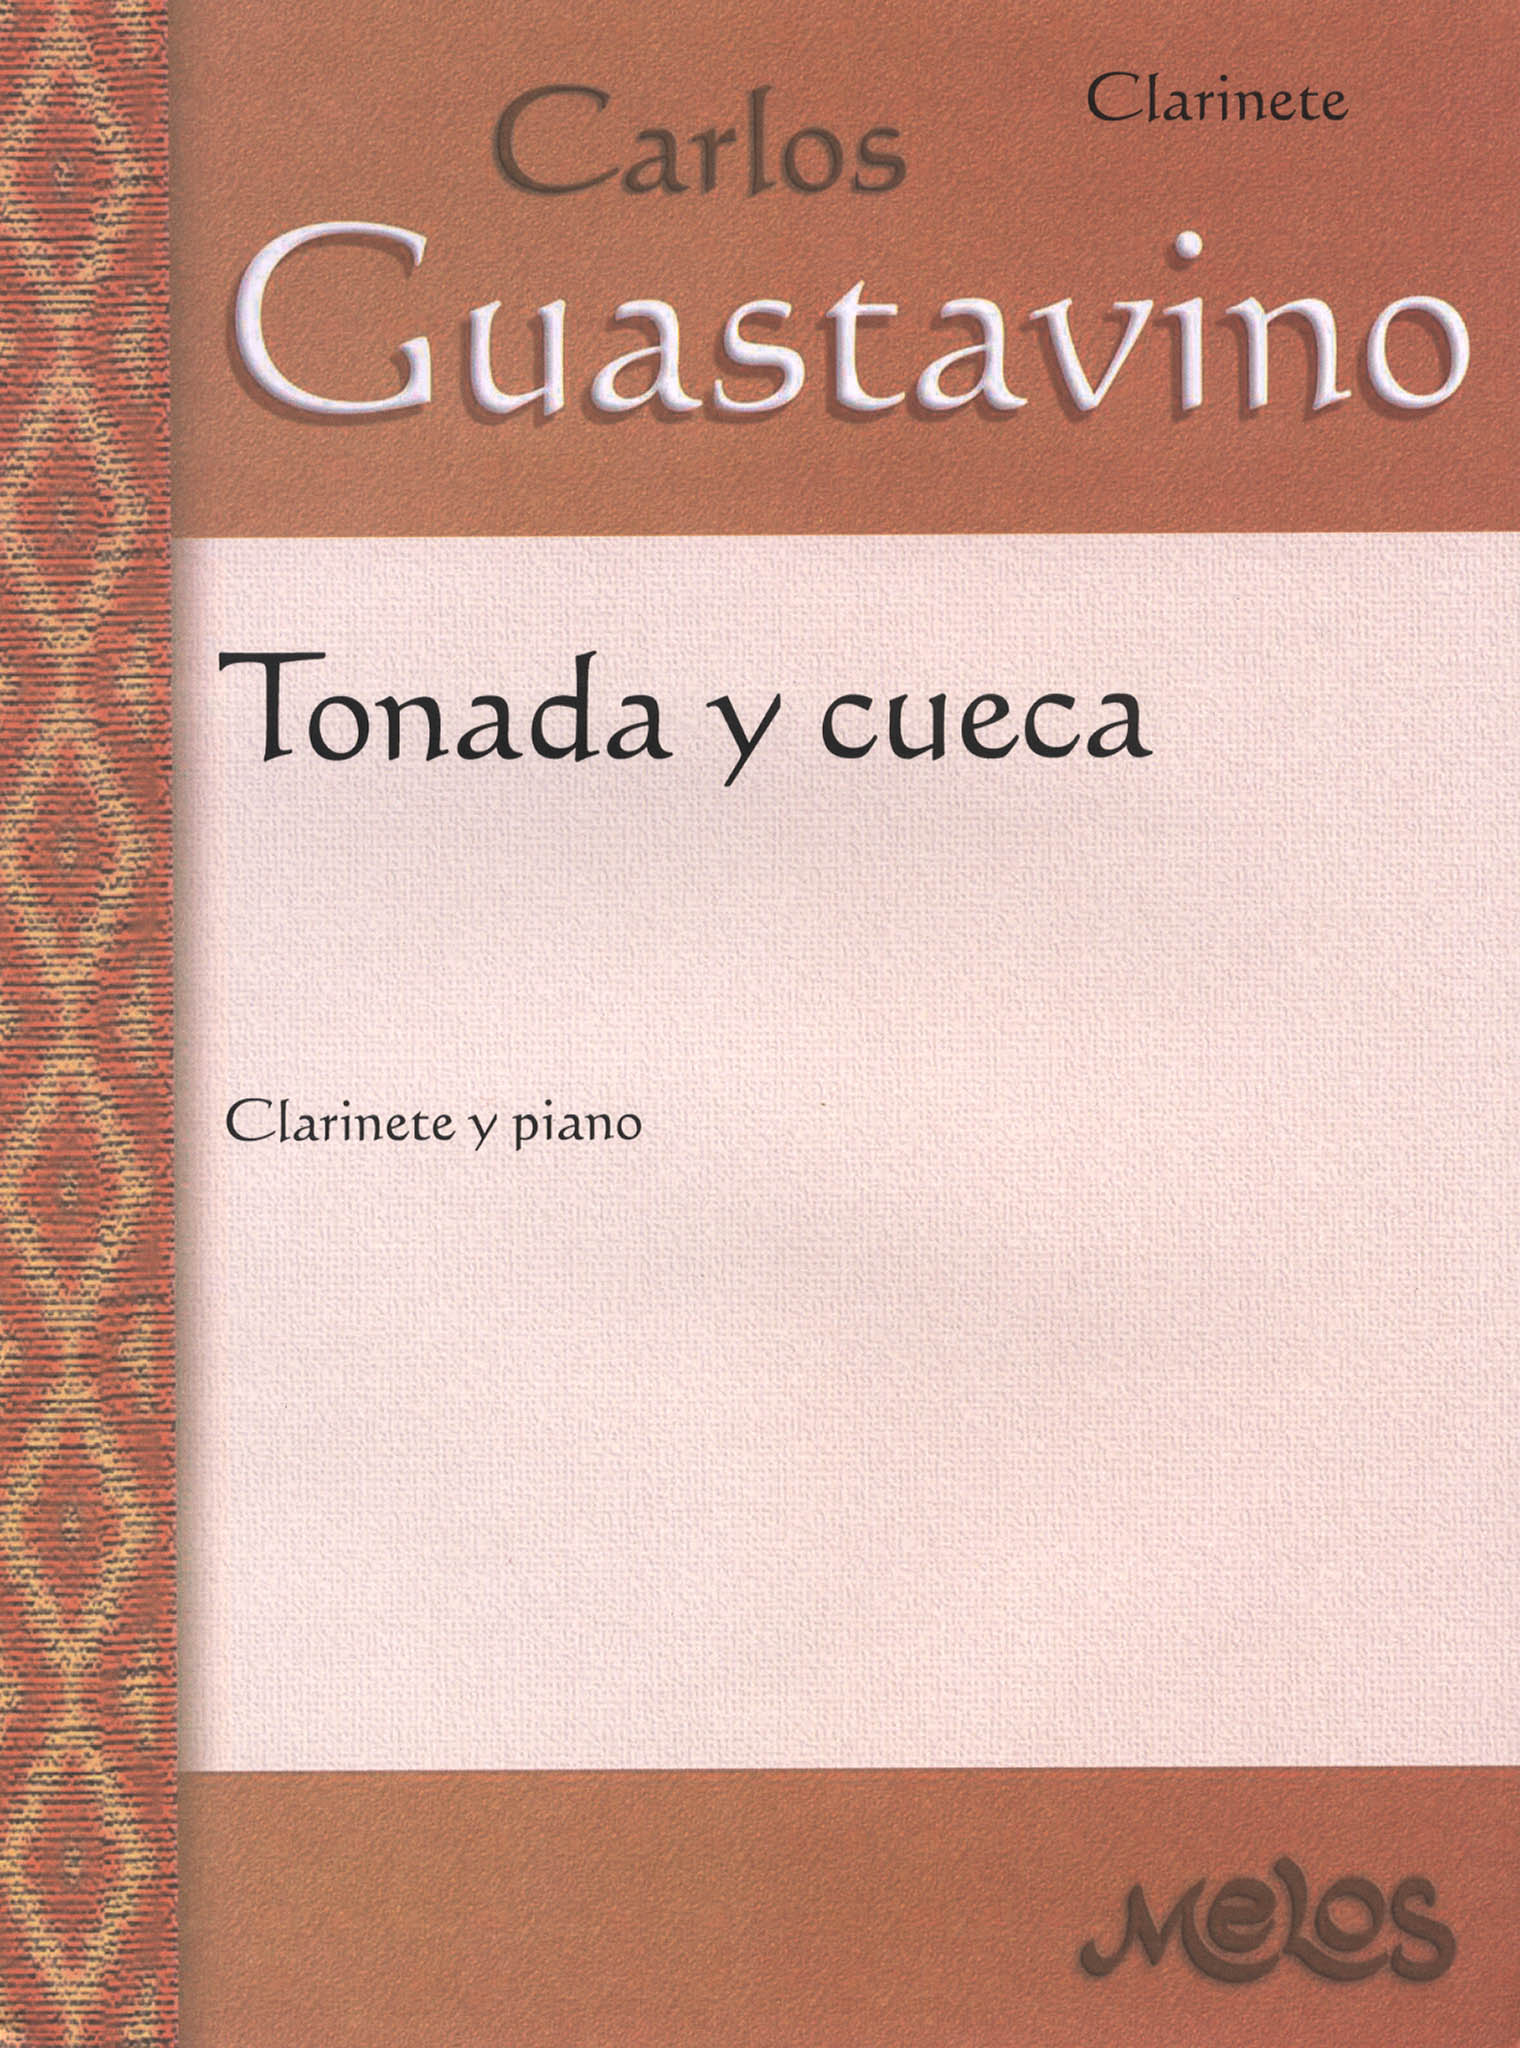 Guastavino Tonada y cueca clarinet and piano cover